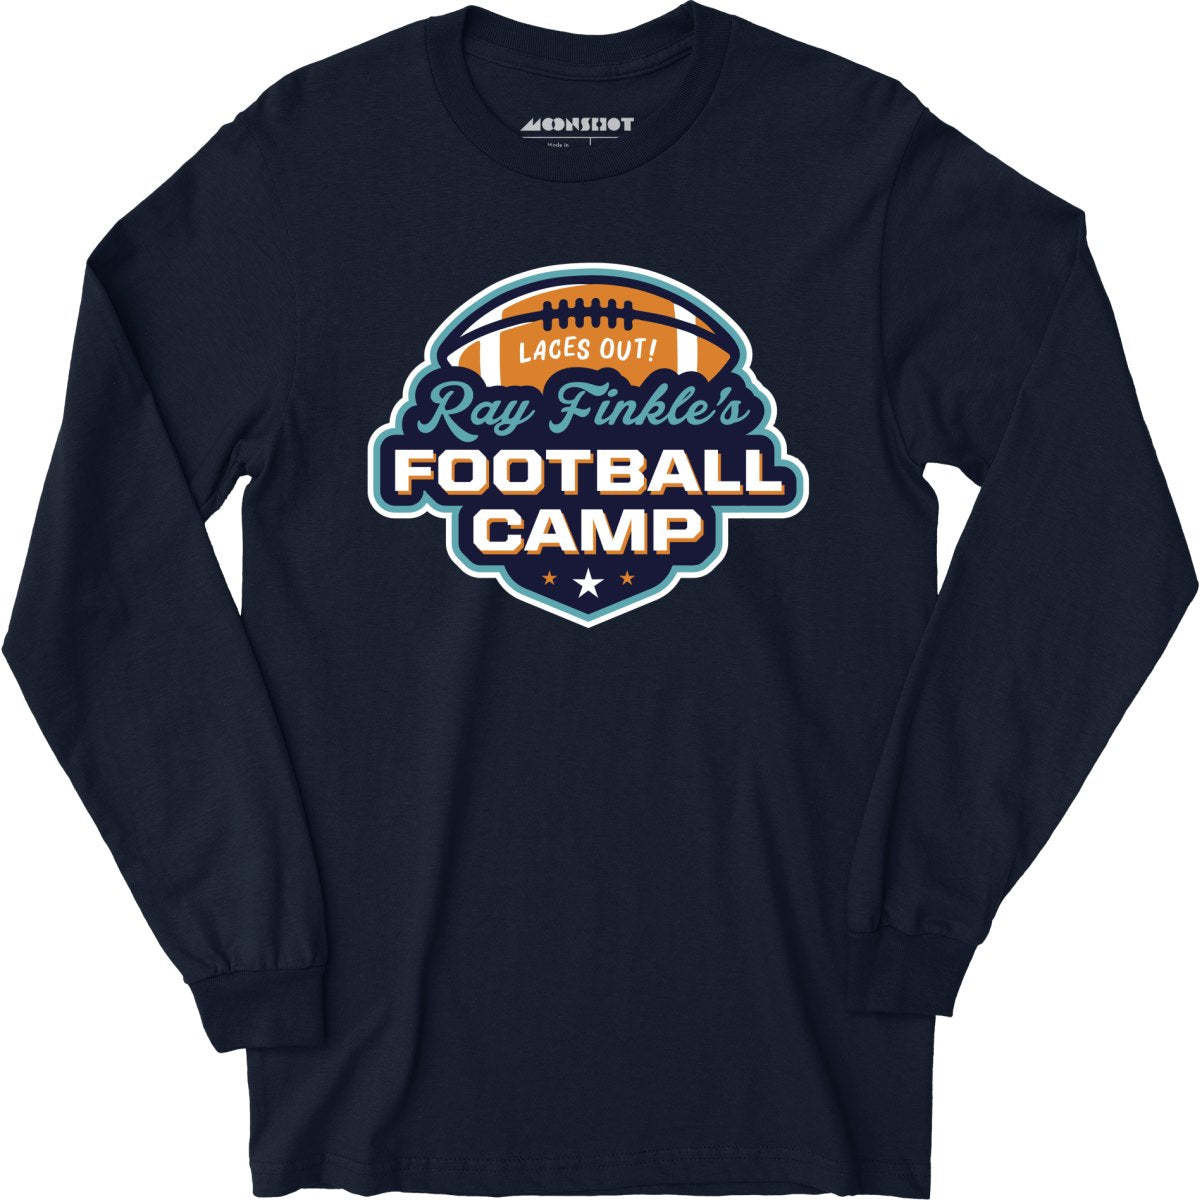 Ray Finkle's Football Camp - Long Sleeve T-Shirt